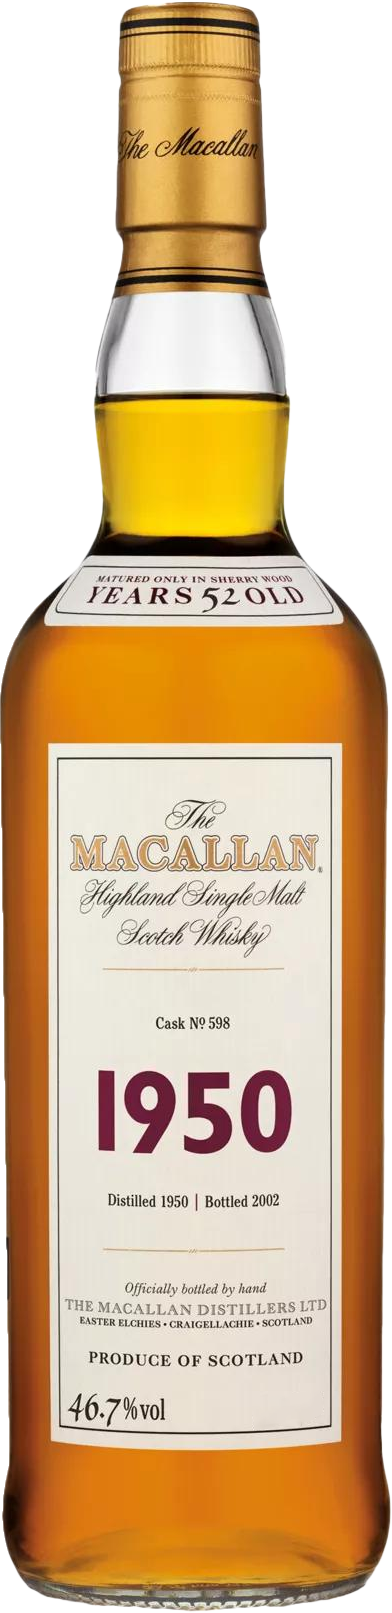 1950 The Macallan Fine & Rare Vintage Single Malt Scotch Whisky